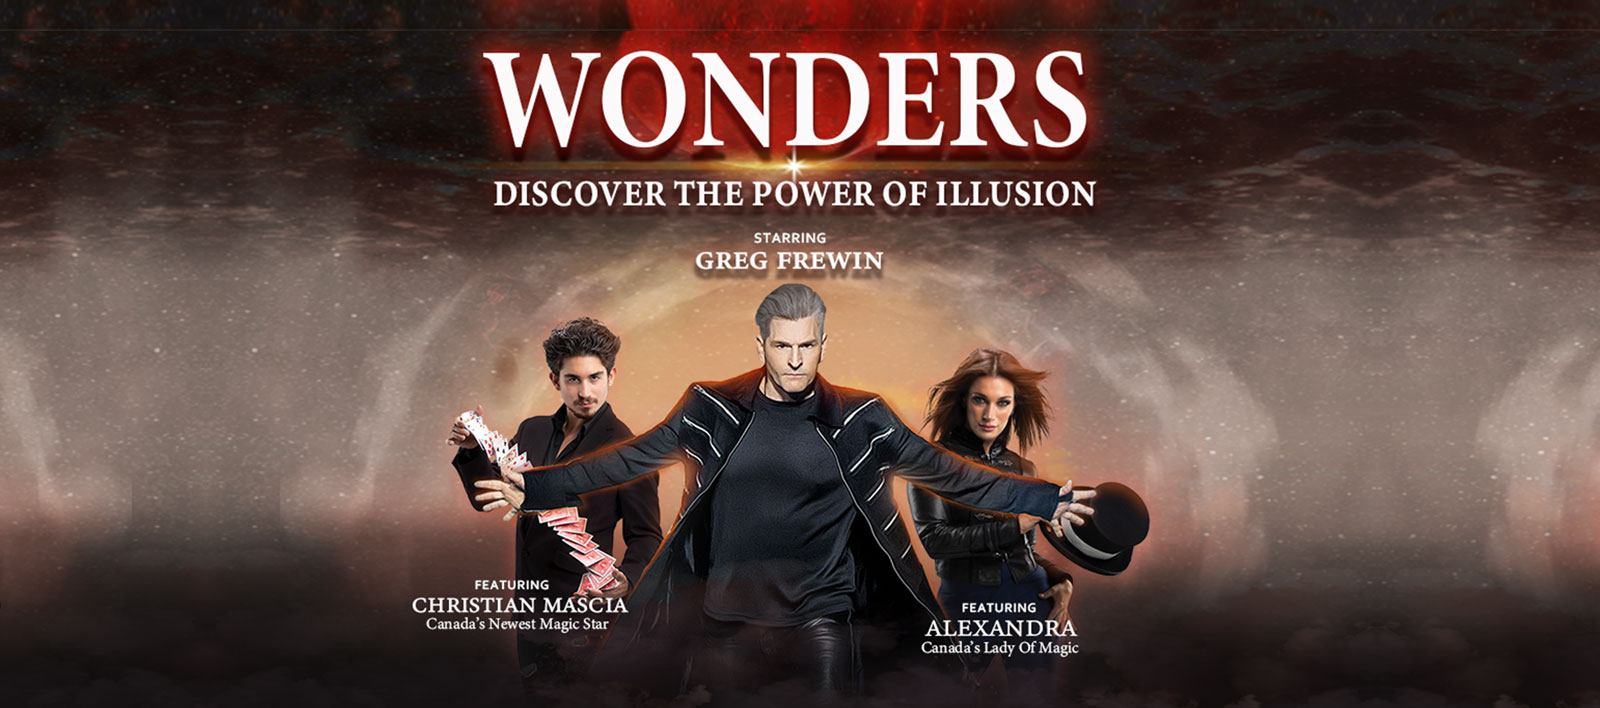 Wonders Magic and Illusion show Starring Greg Frewin, Christian Mascia and Alexandra